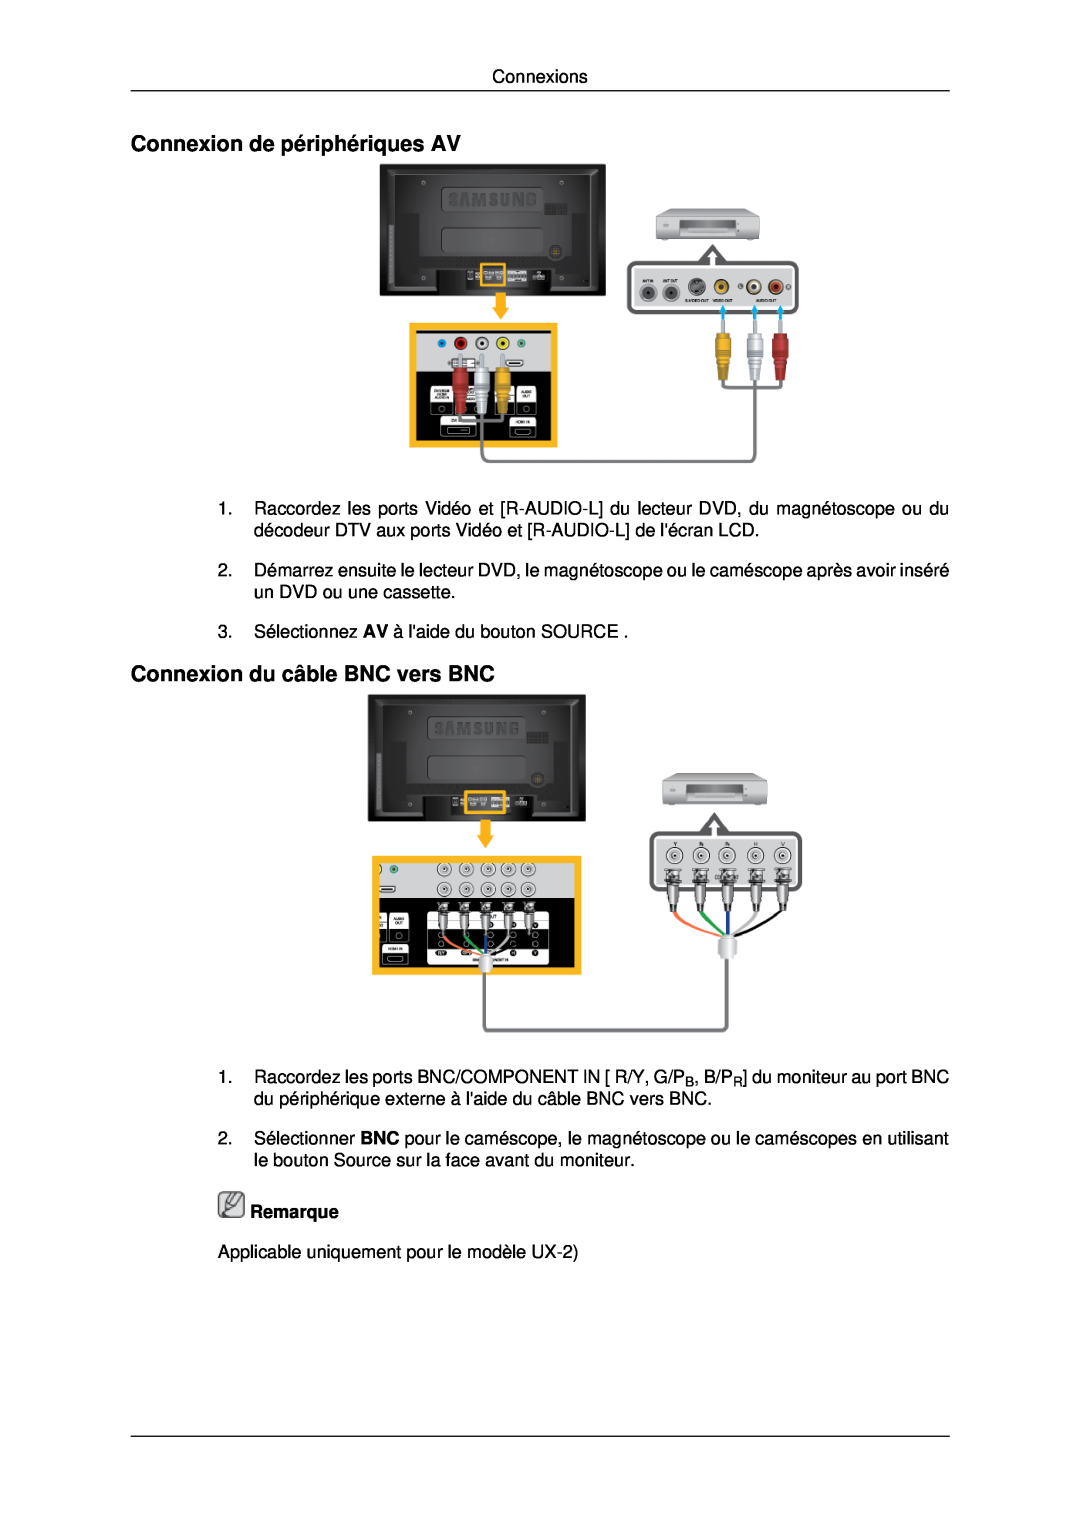 Samsung LH46MSTLBB/EN, LH46MRPLBF/EN manual Connexion de périphériques AV, Connexion du câble BNC vers BNC, Remarque 